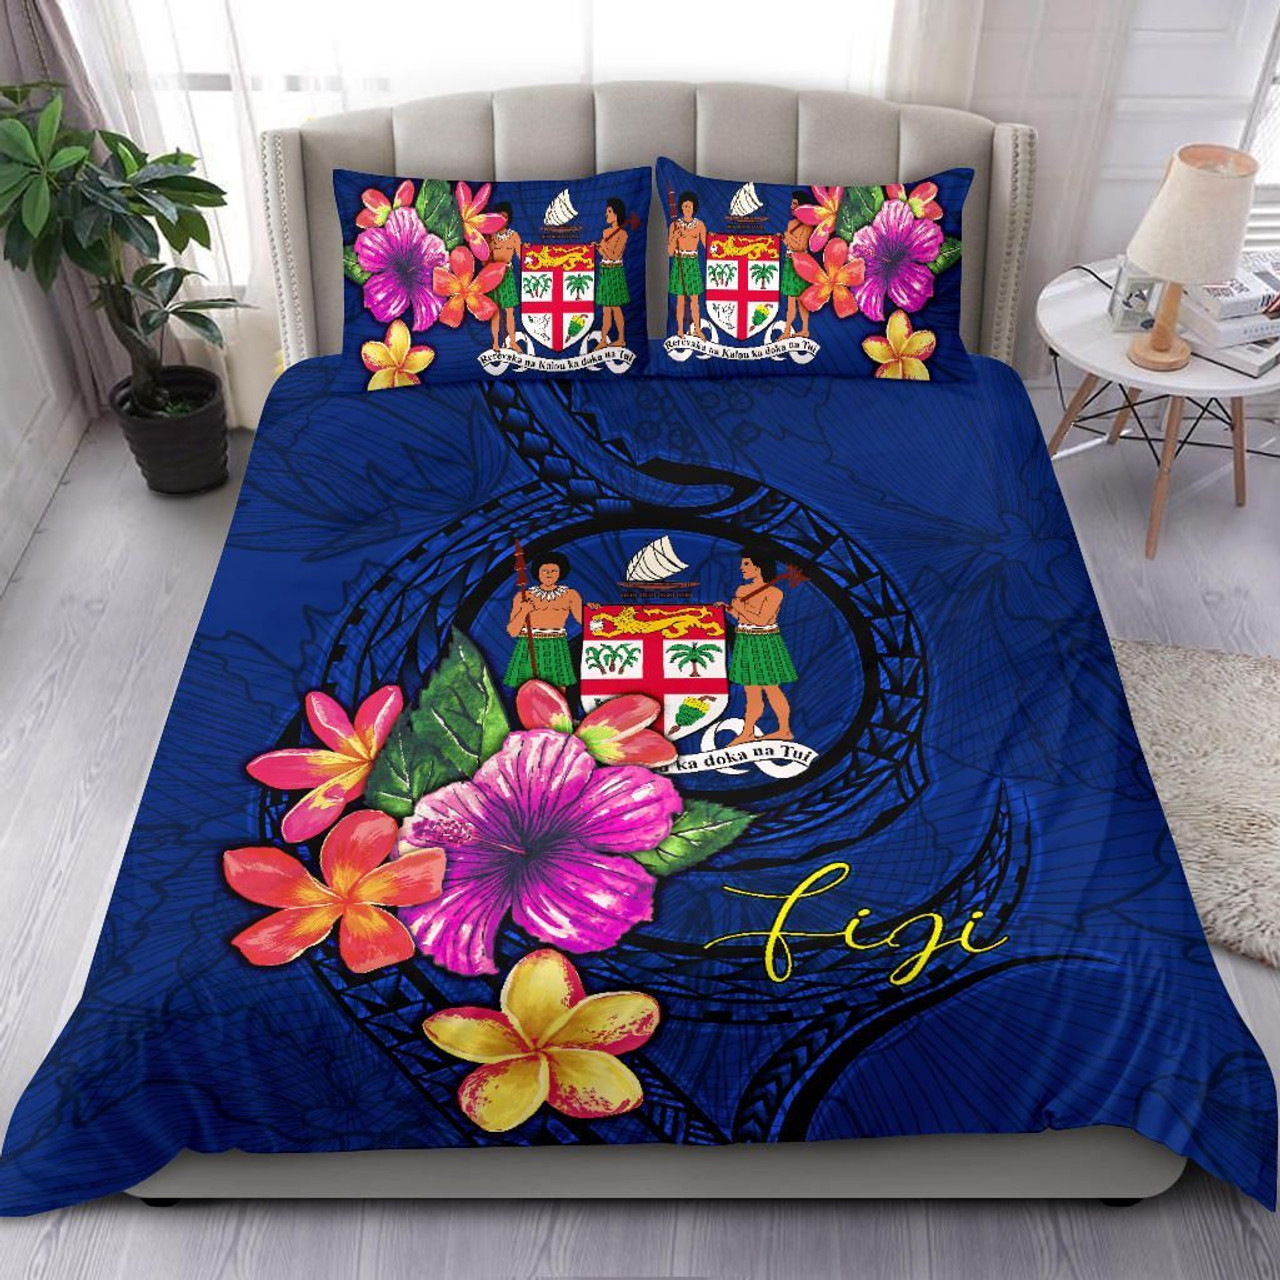 Polynesian Bedding Set - Fiji Duvet Cover Set Floral With Seal Blue 1